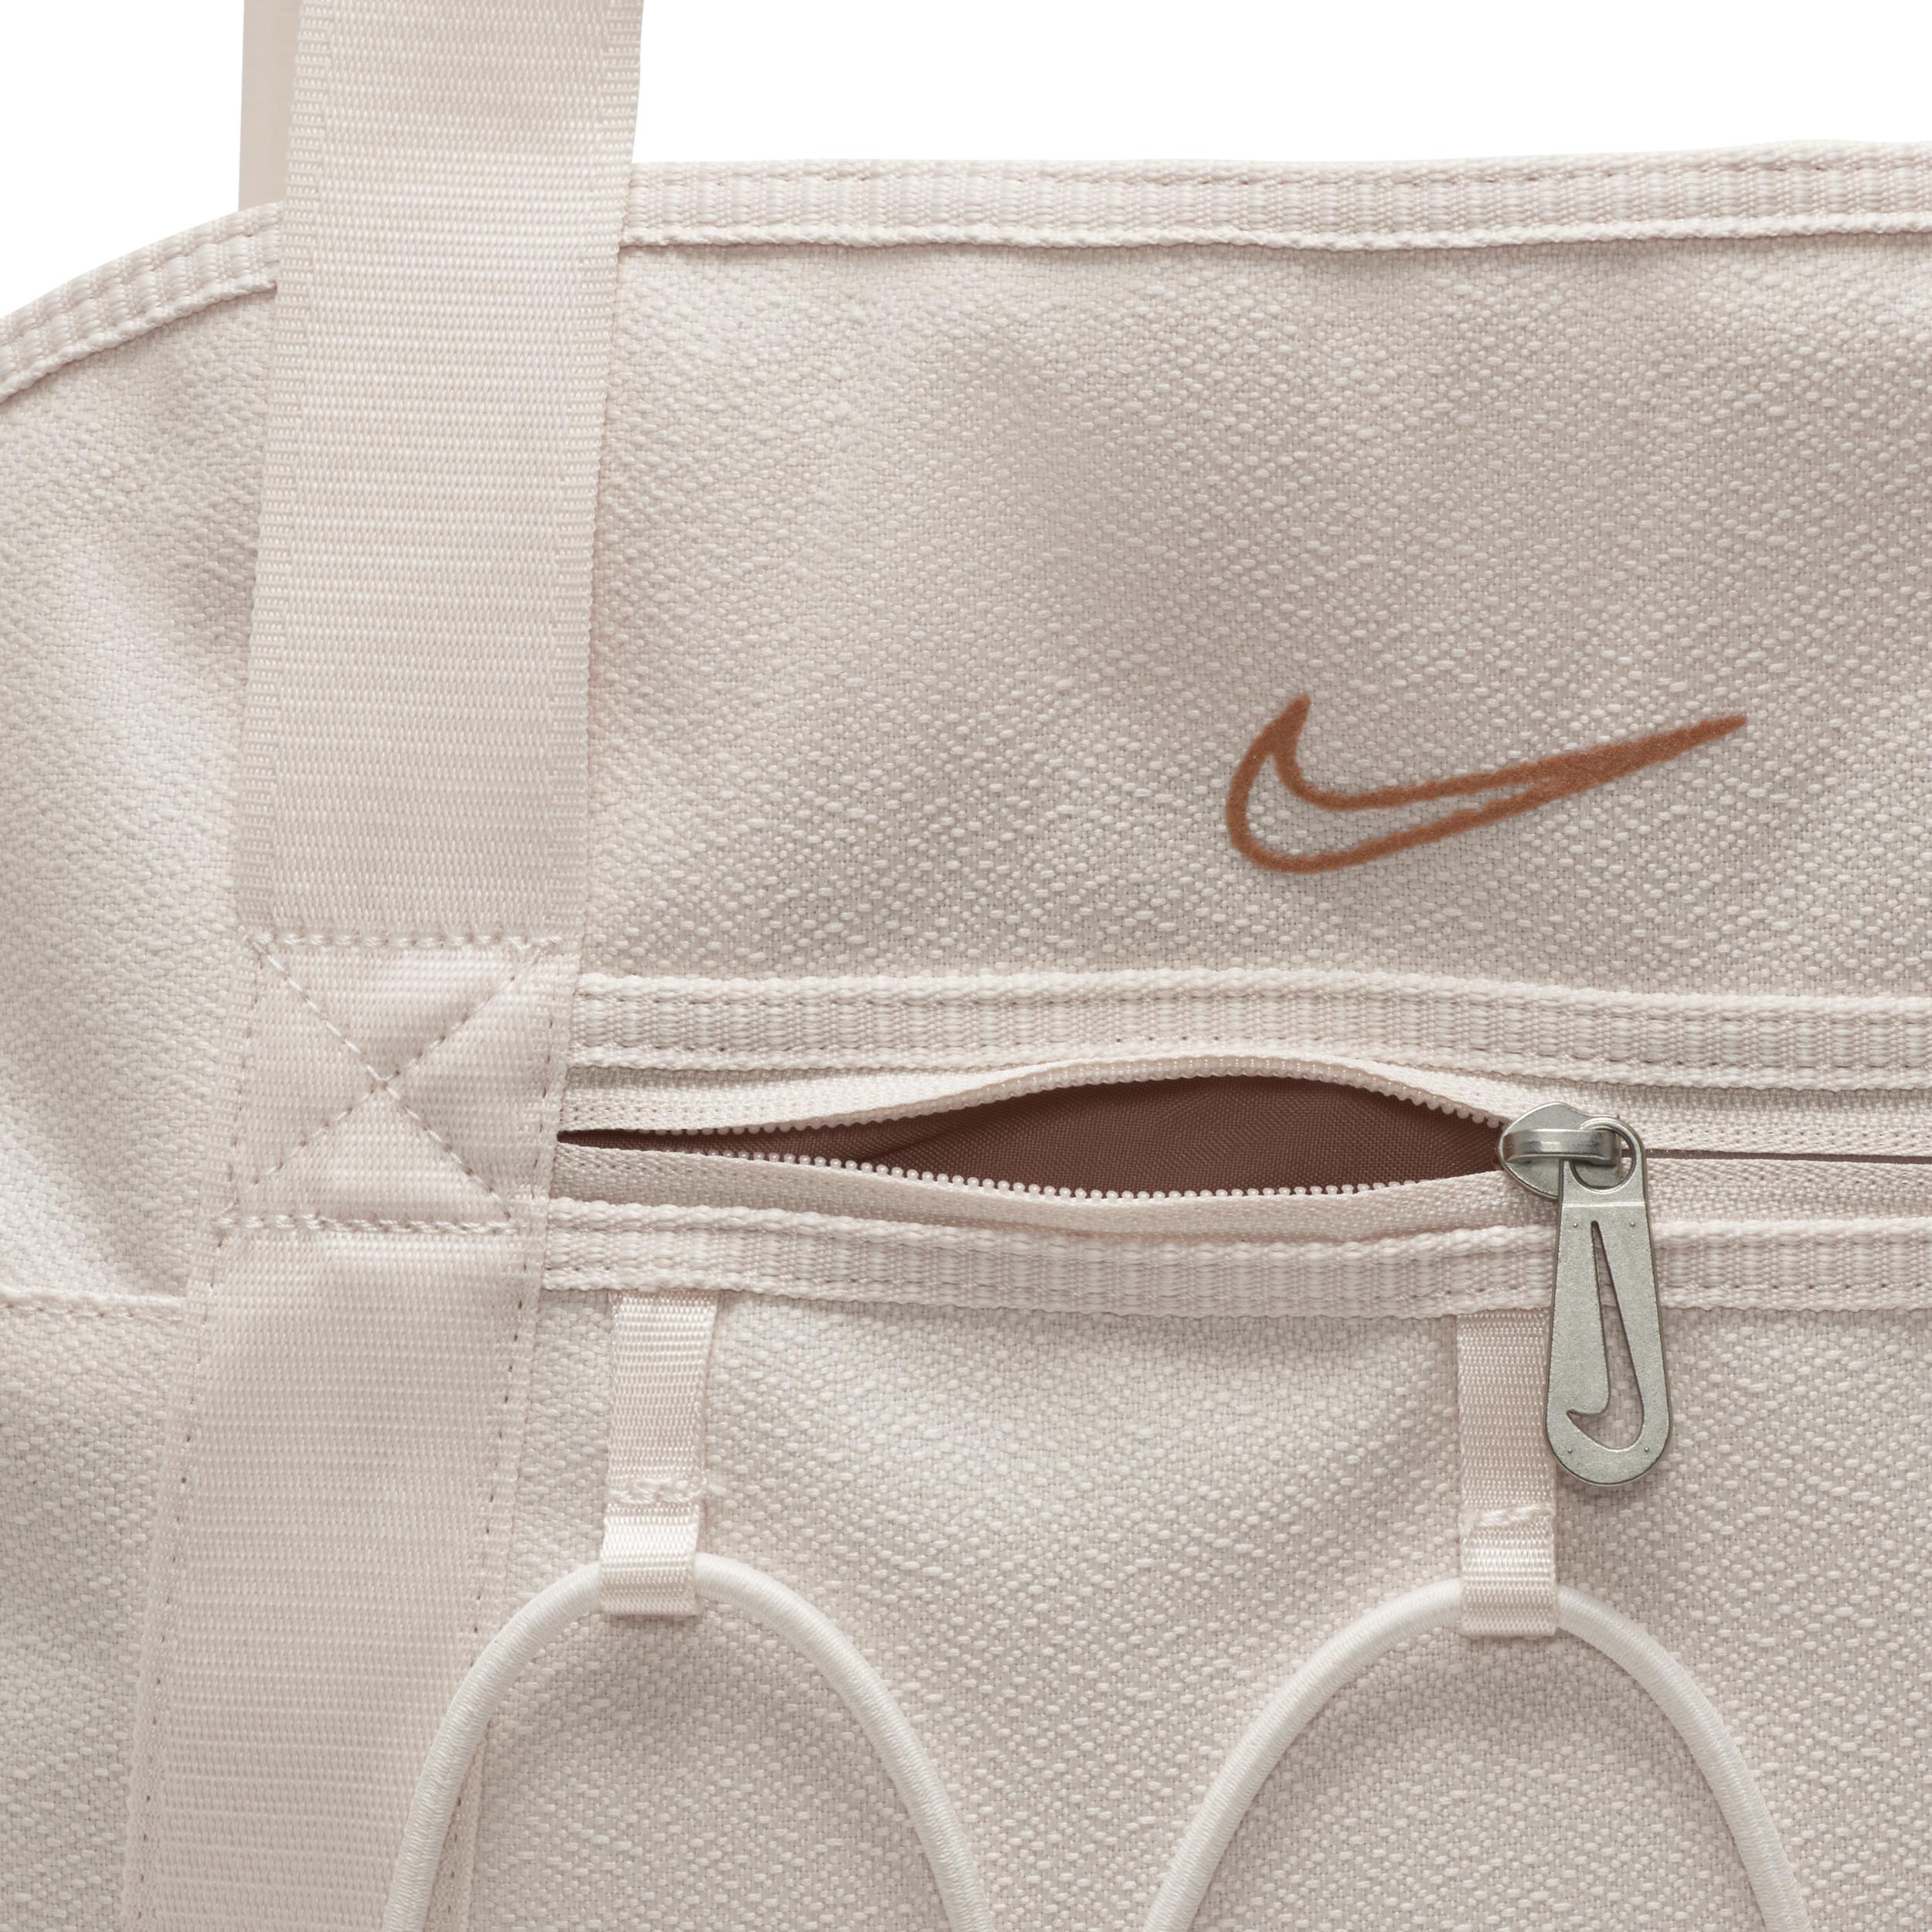 Nike One Training Tote Bag